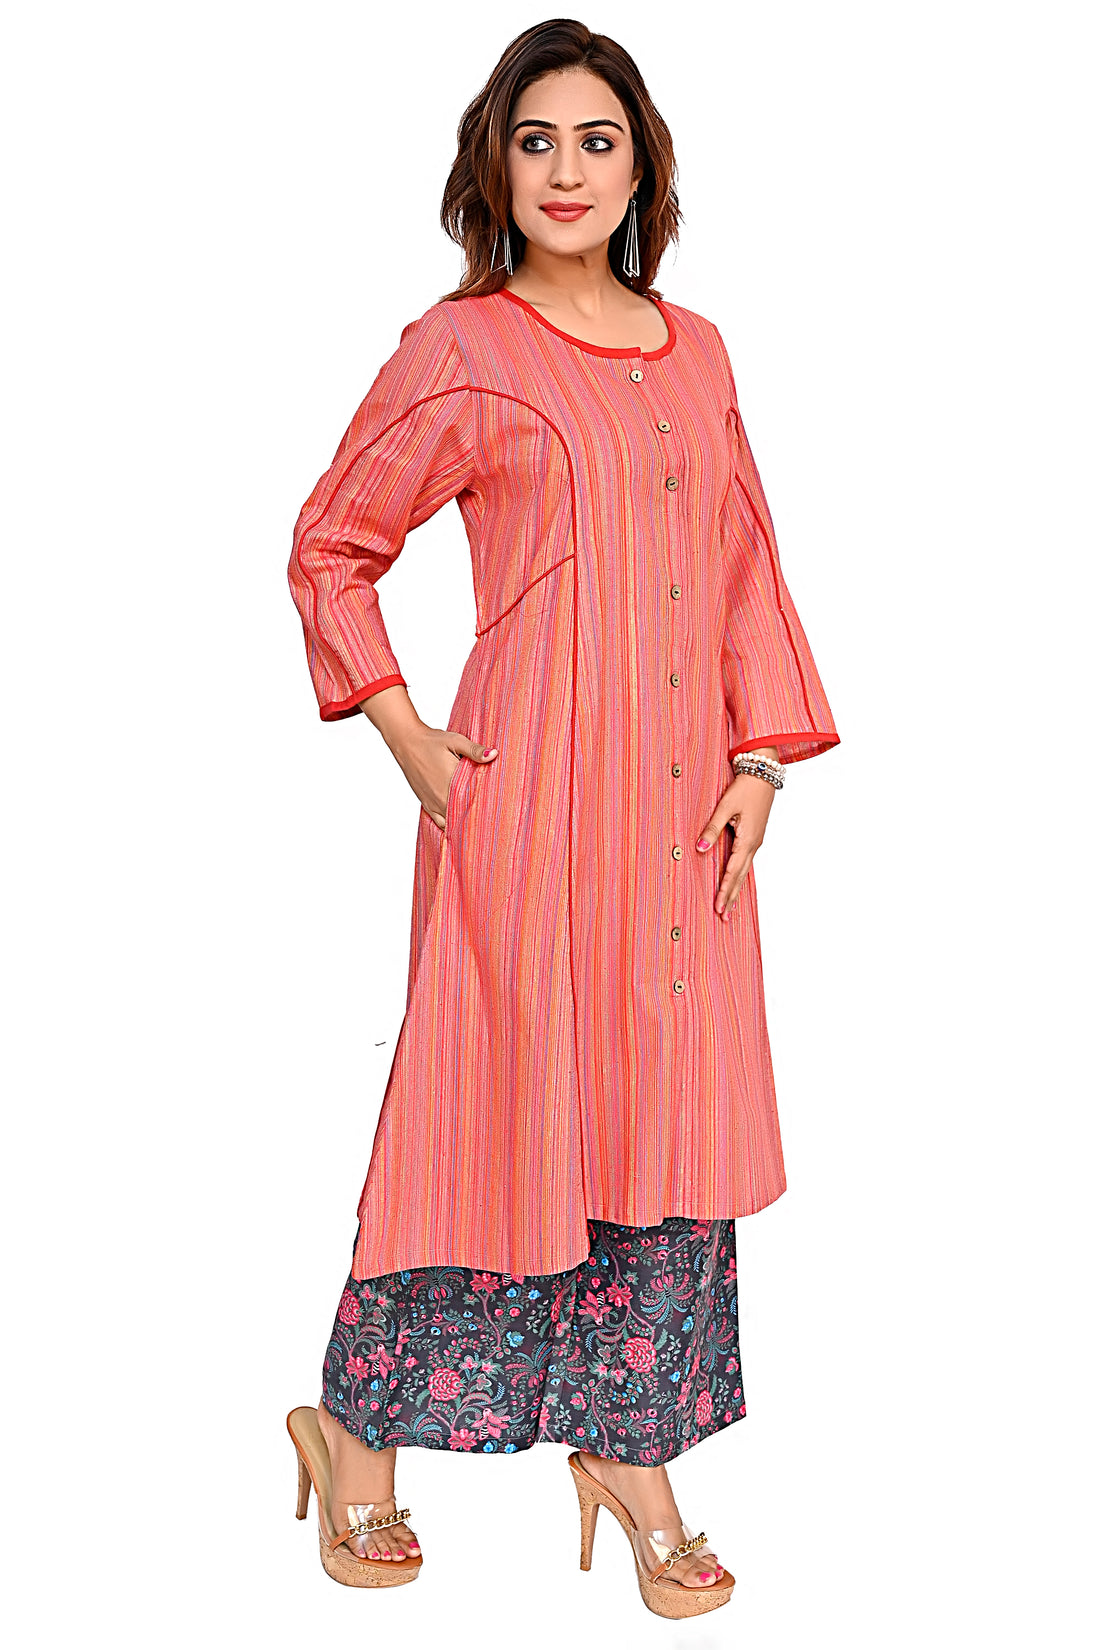 Nirmal Online Premium Cotton co-ord set for Women in Red Colour Stripe